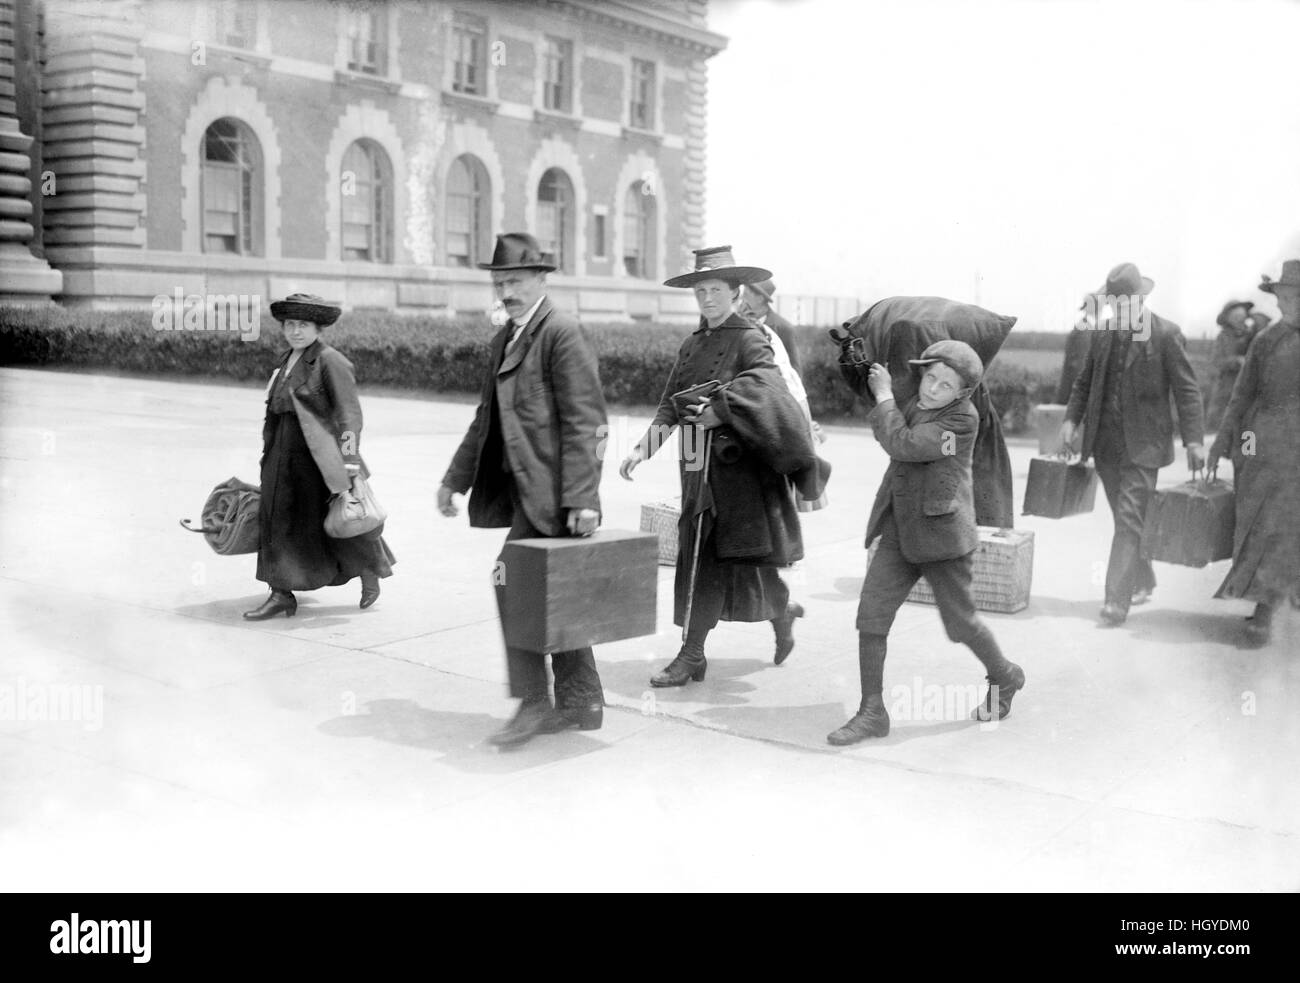 Ankunft Der Immigranten Ellis Island New York City New York Usa Bain Nachrichtendienst 1920 Stockfotografie Alamy